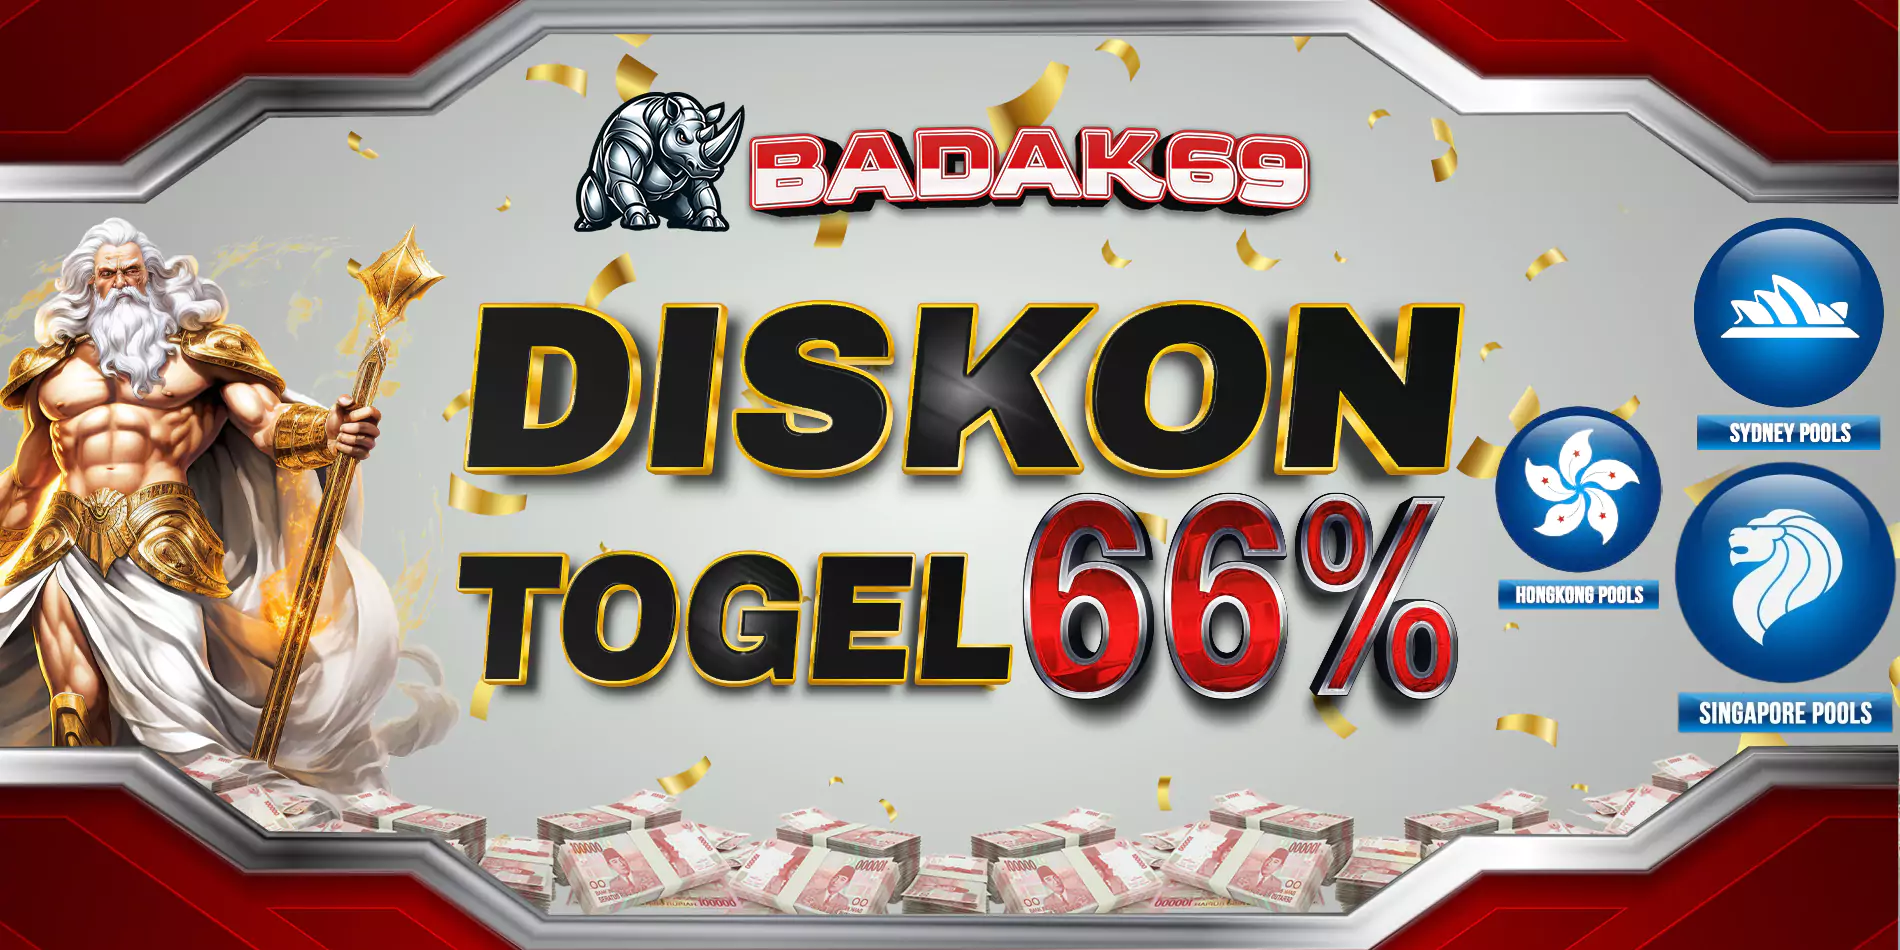 Promo Diskon Togel Infini 4D Badak69